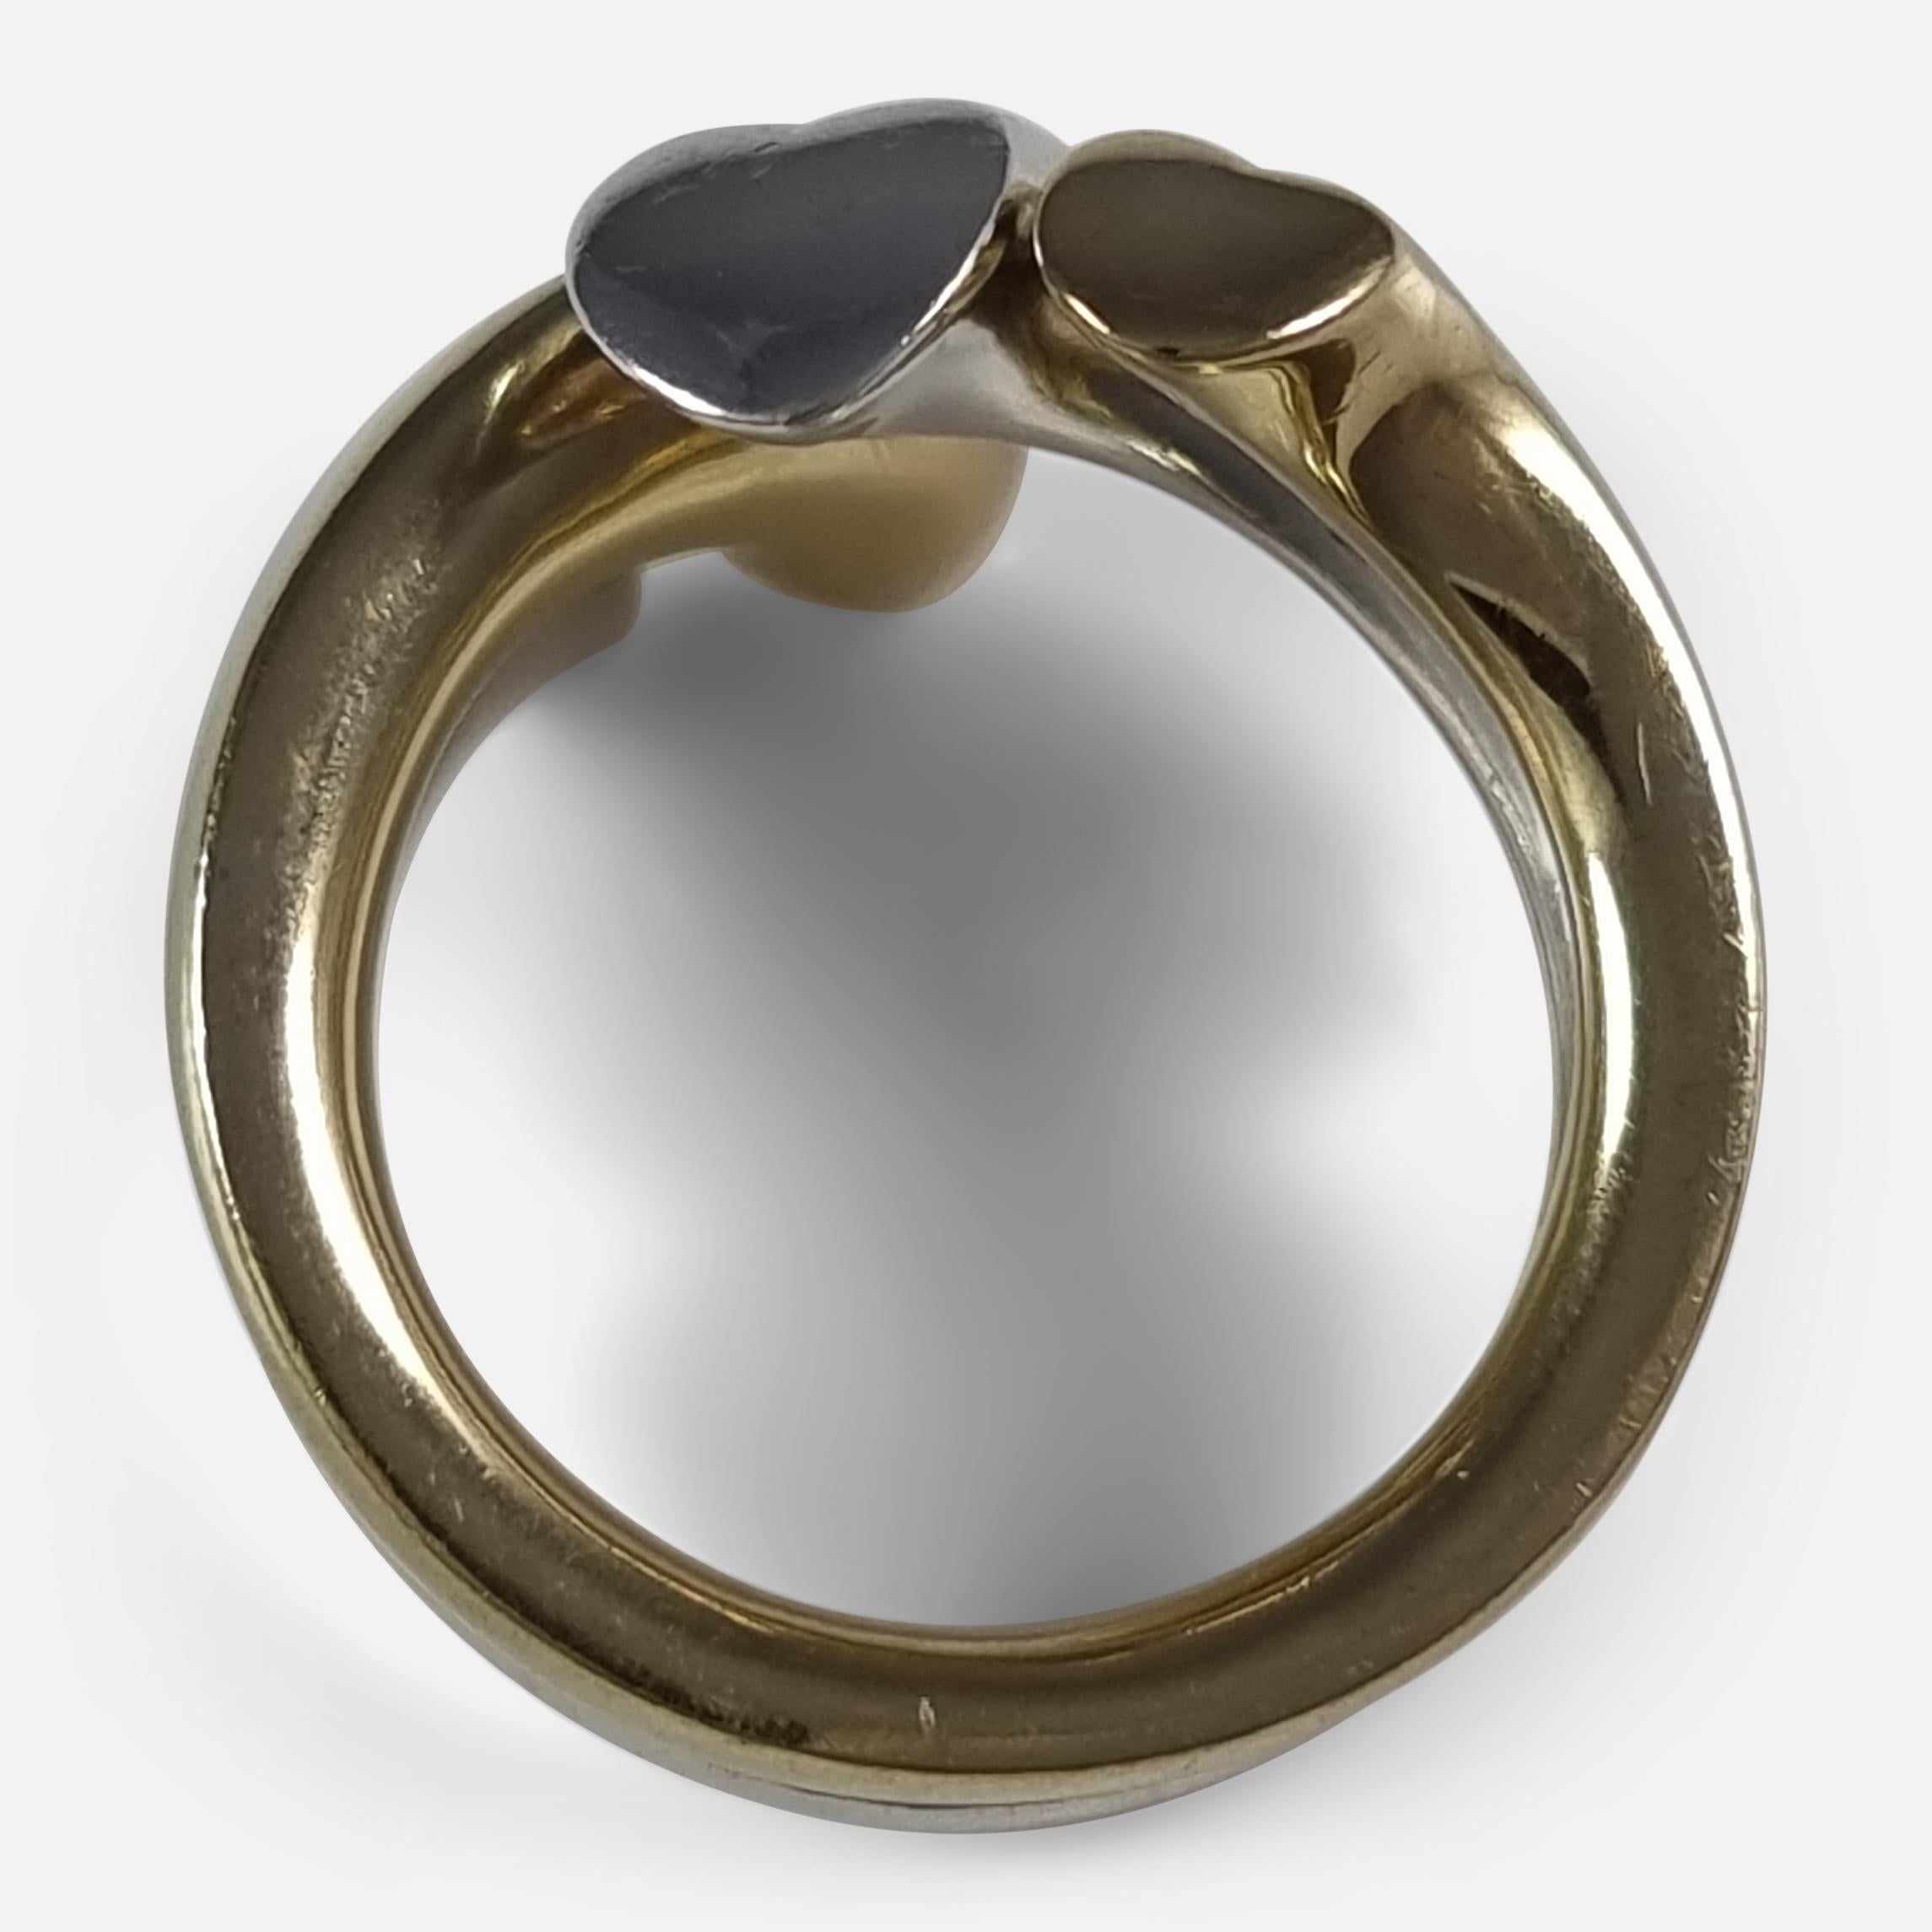 Georg Jensen 18ct Gold and Silver 'Devoted Heart' Ring, Regitze Overgaard 9